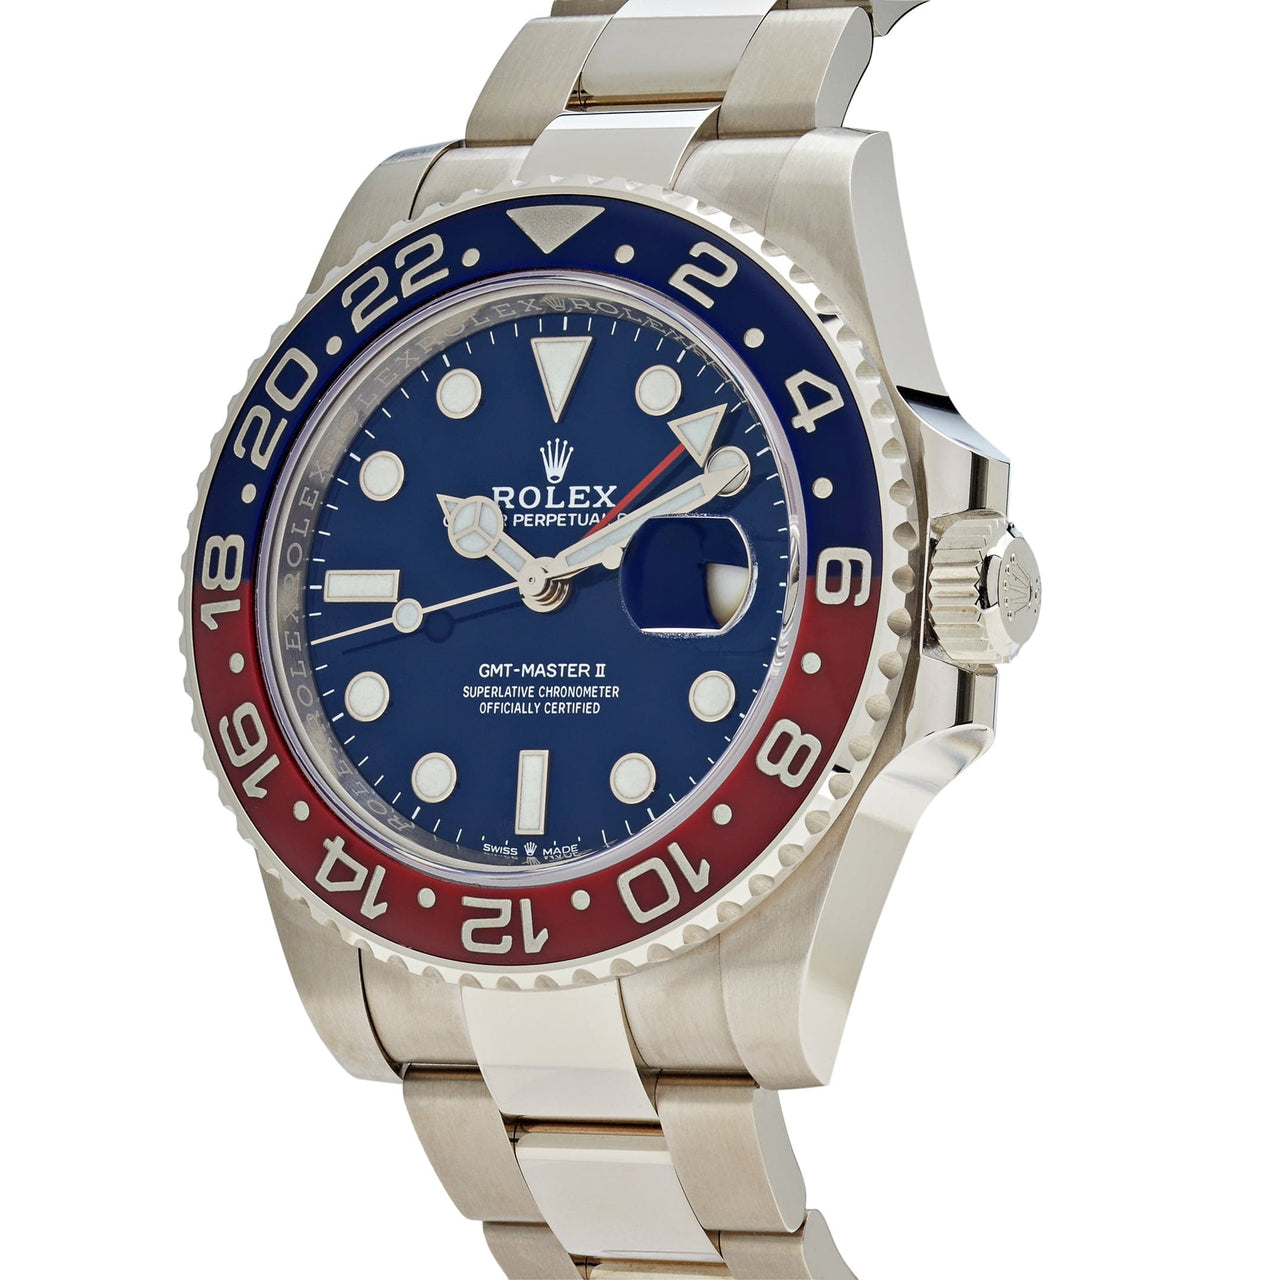 Rolex GMT-Master II Pepsi White Gold Blue Dial 126719BLRO wrist aficionado